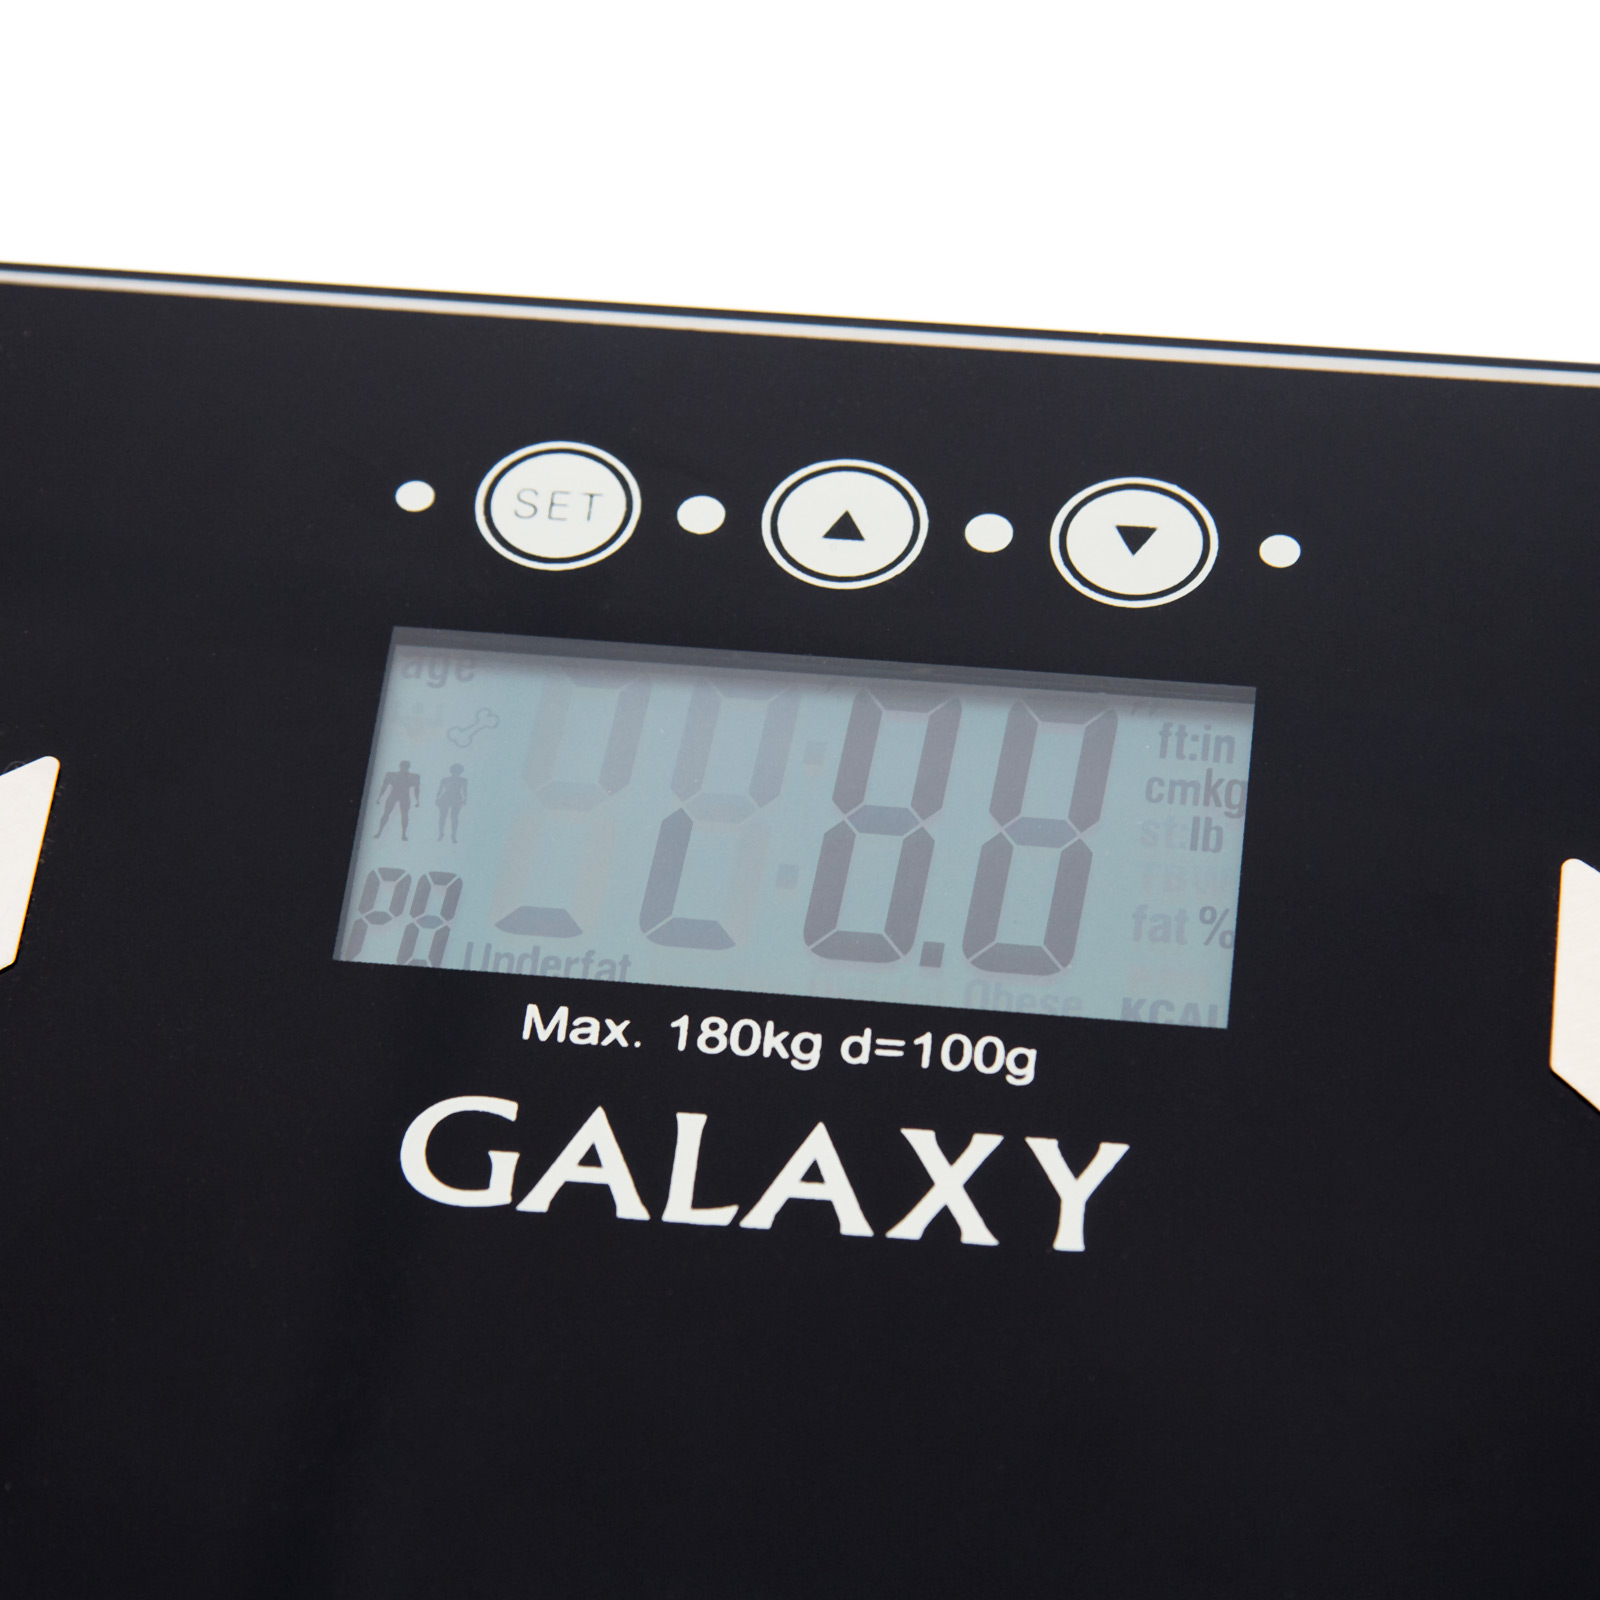   Galaxy Line GL4850